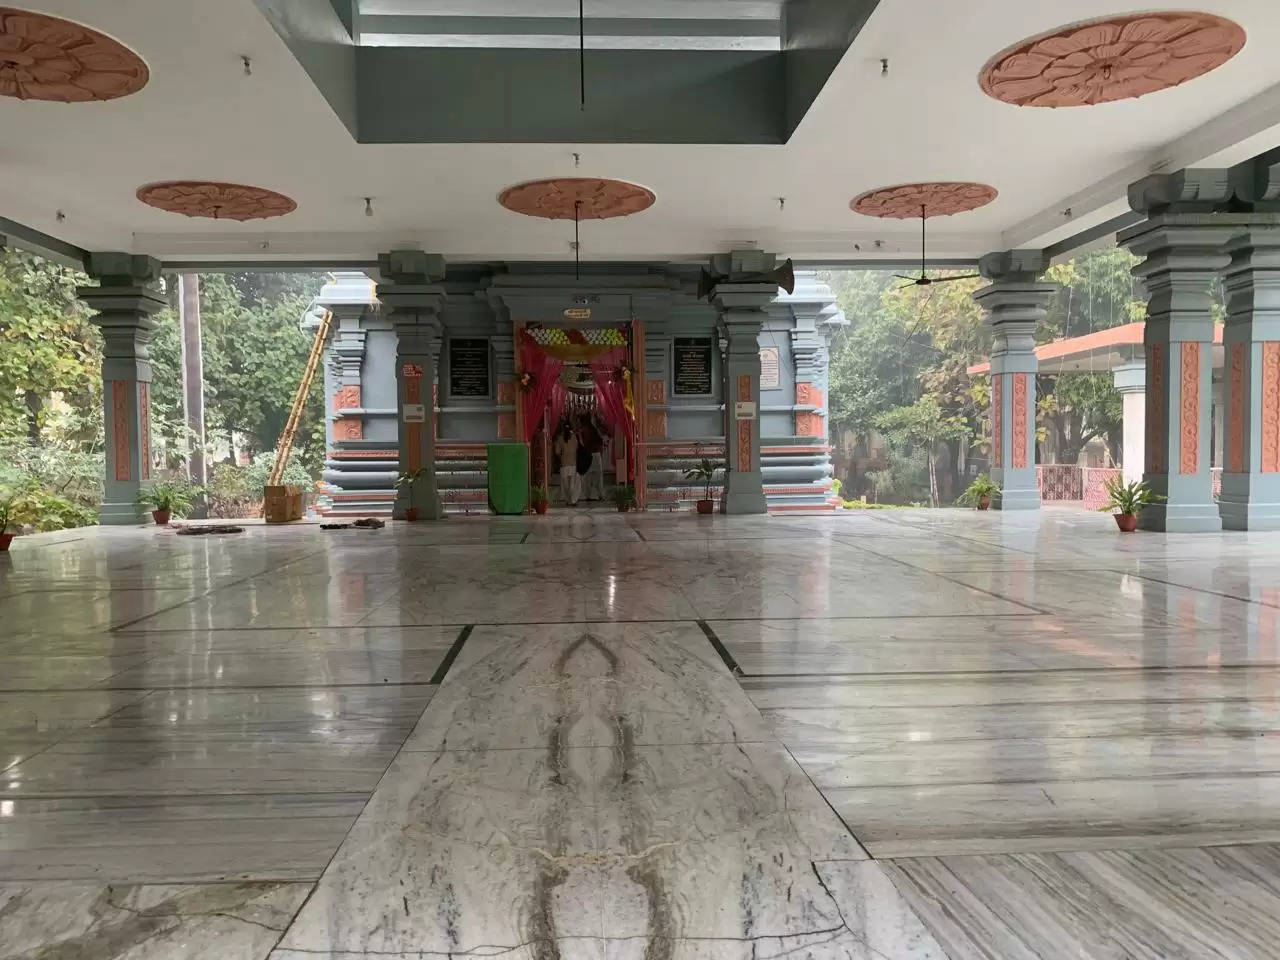 ma saraswati temple in varanasi